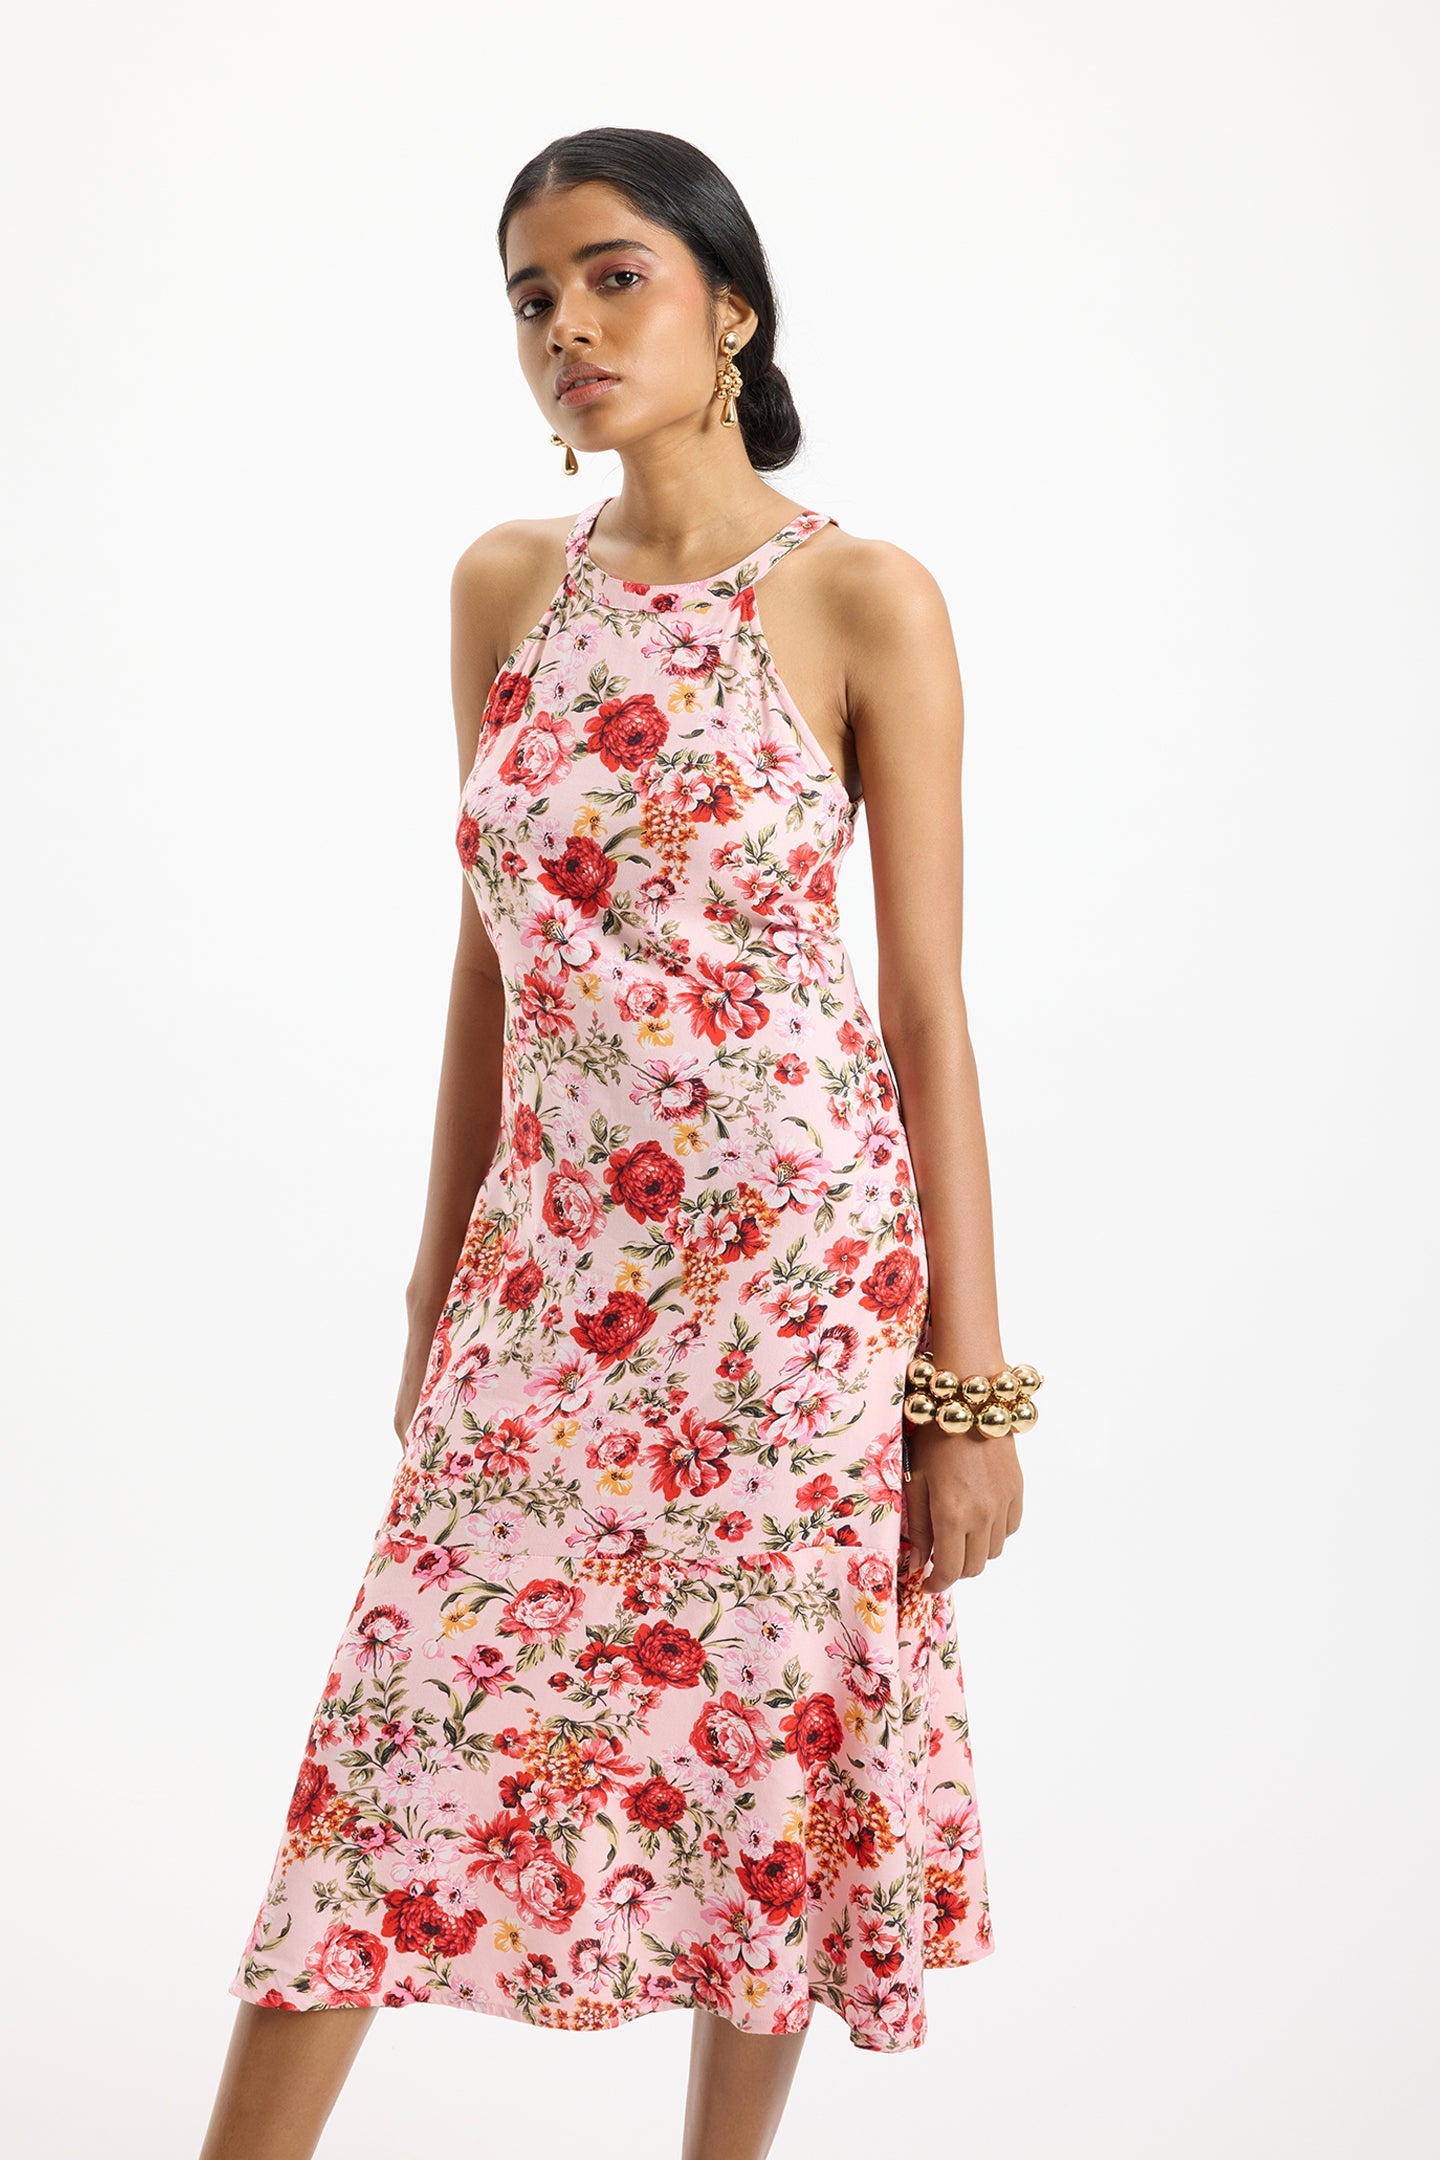 Parnika|Blossom White Halter A-line Dress